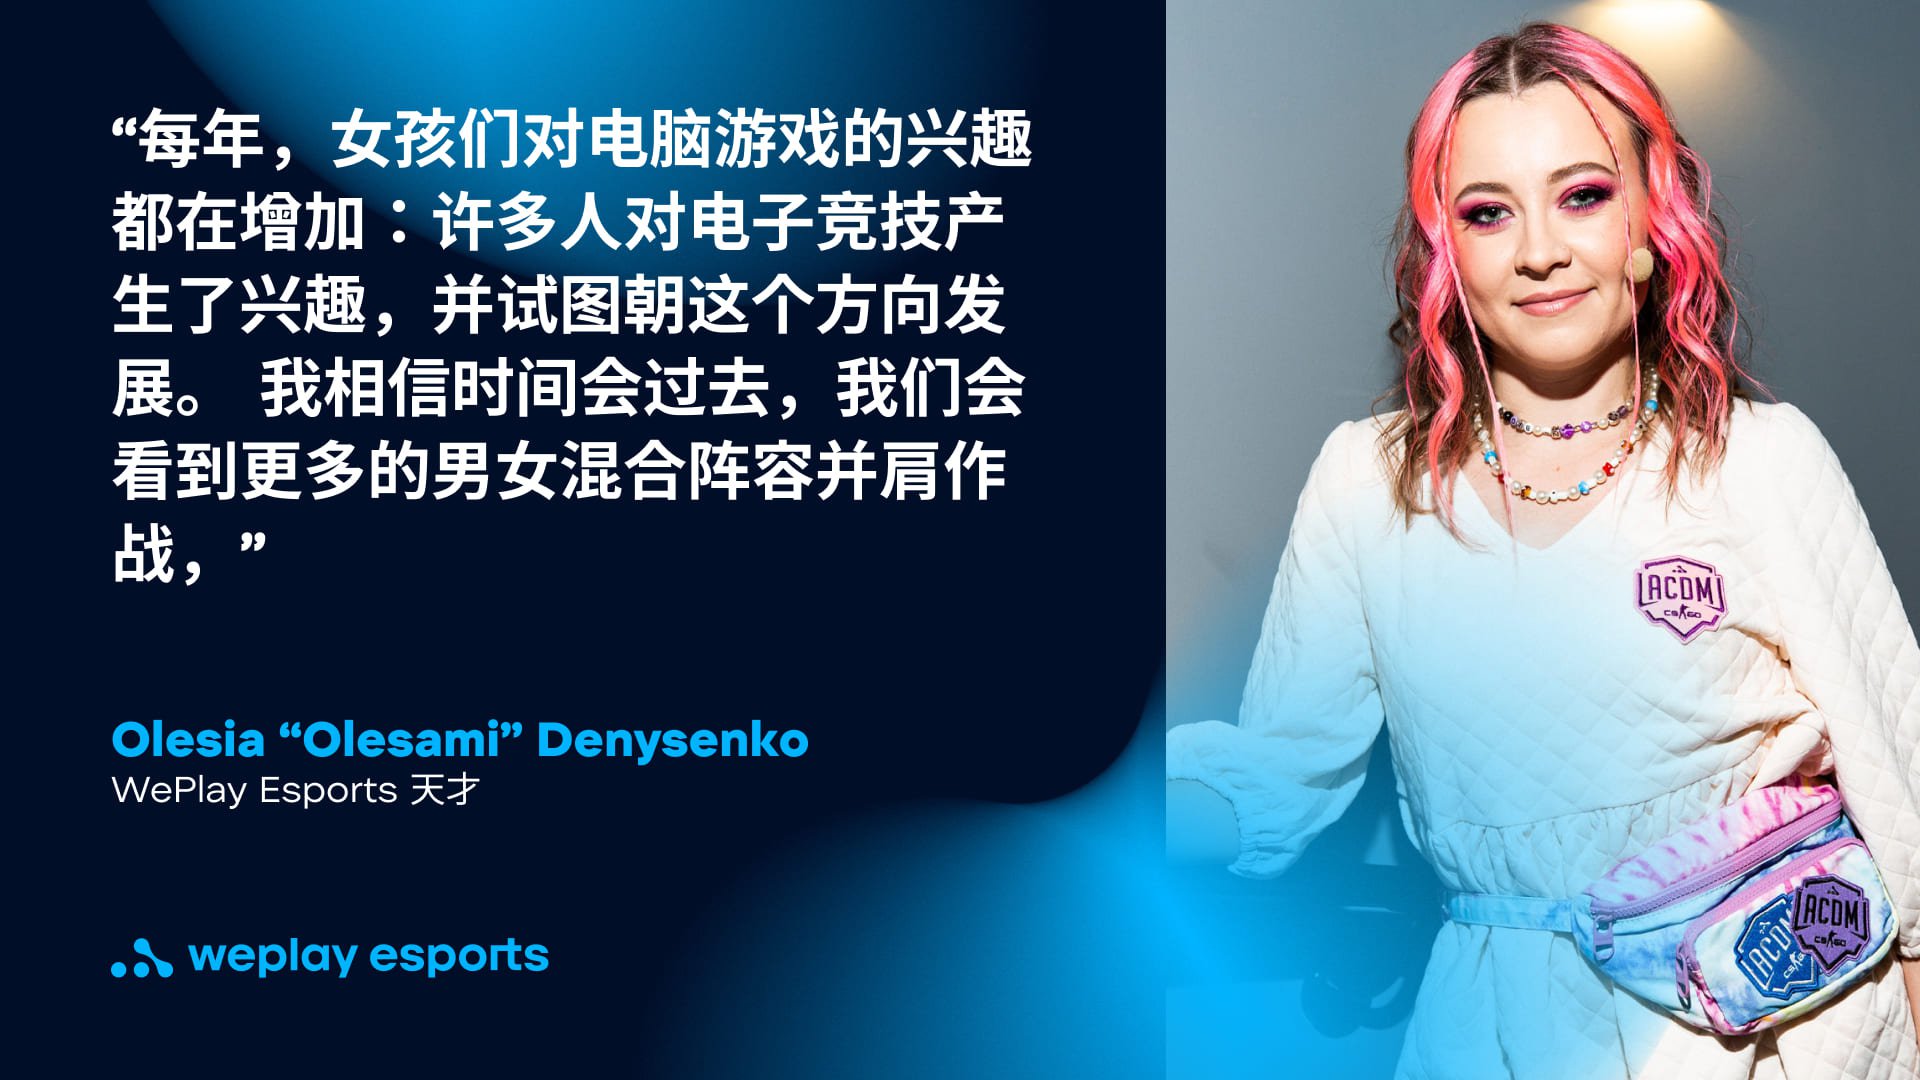 WePlay Esports 天才 Olesia “Olesami” Denysenko。照片：WePlay Holding